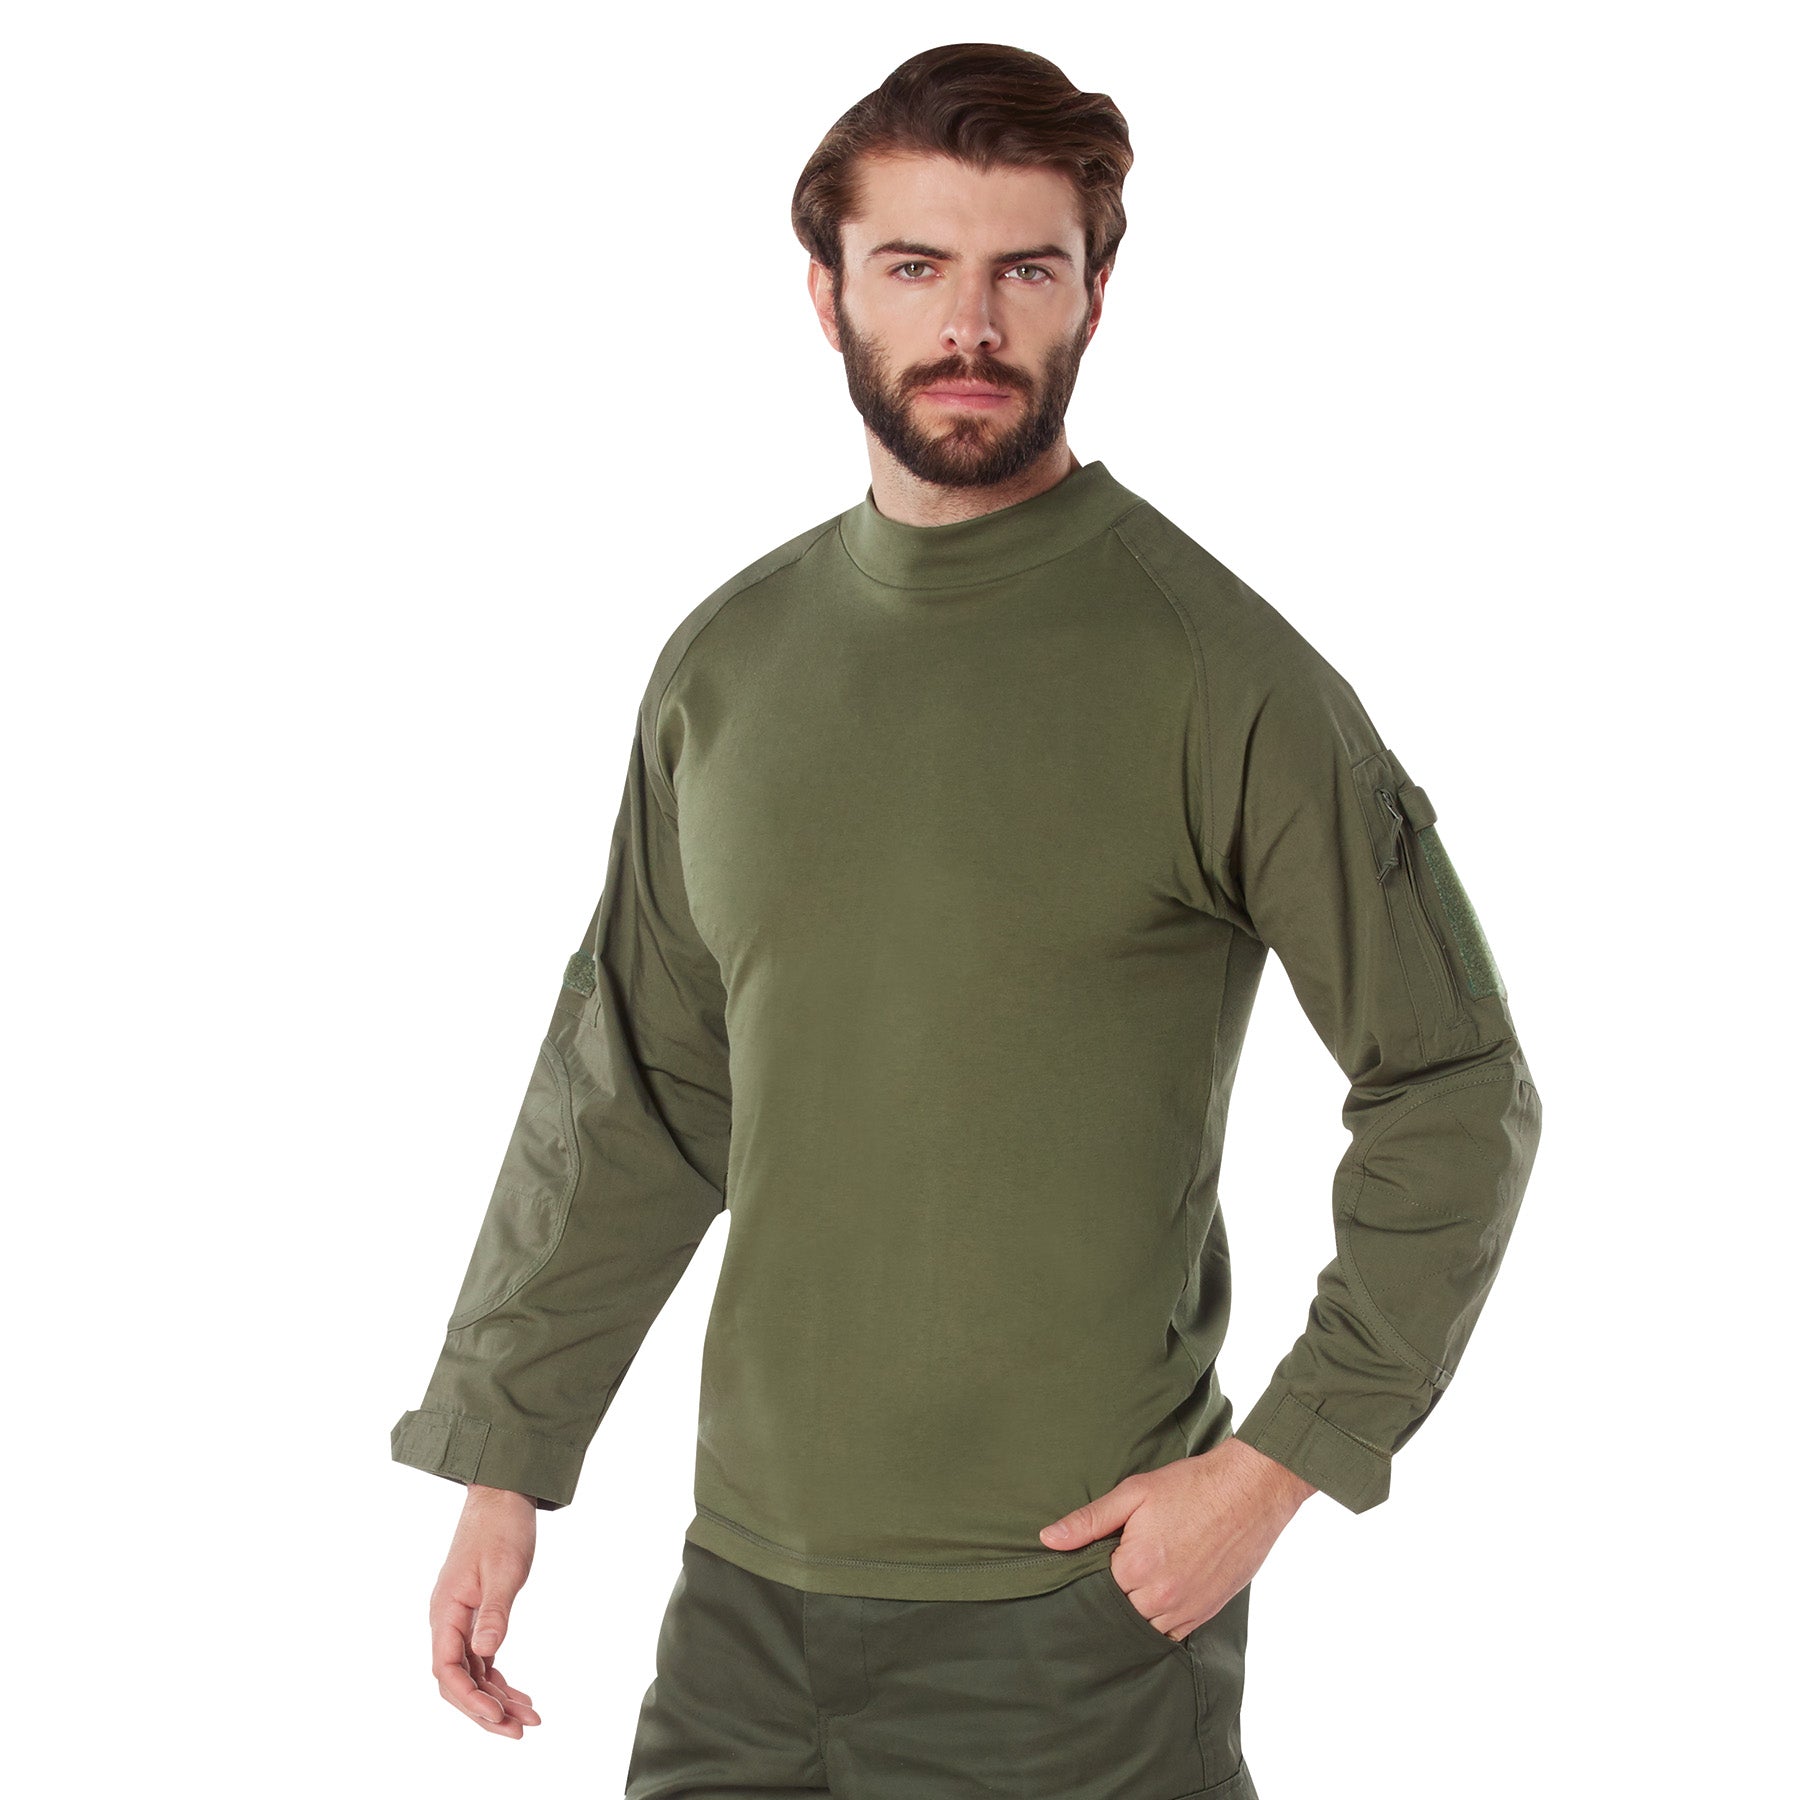 [Military][Fire Retardant] Acrylic/Cotton/Nylon/Cotton Combat Shirts Olive Drab